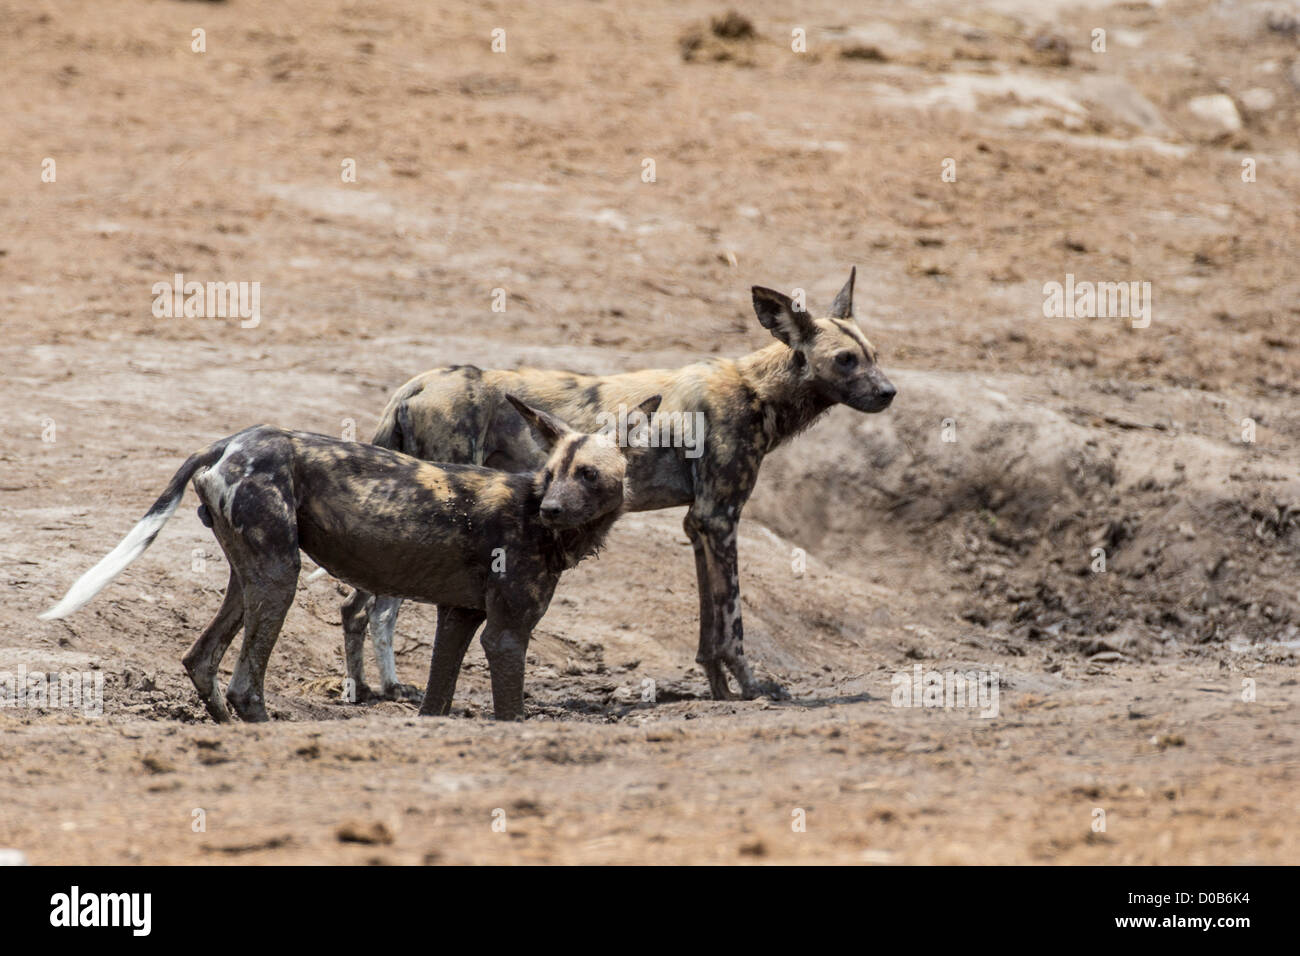 African wild dog (Lyacon pictus) in the Khaudum National Park, Namibia. Stock Photo